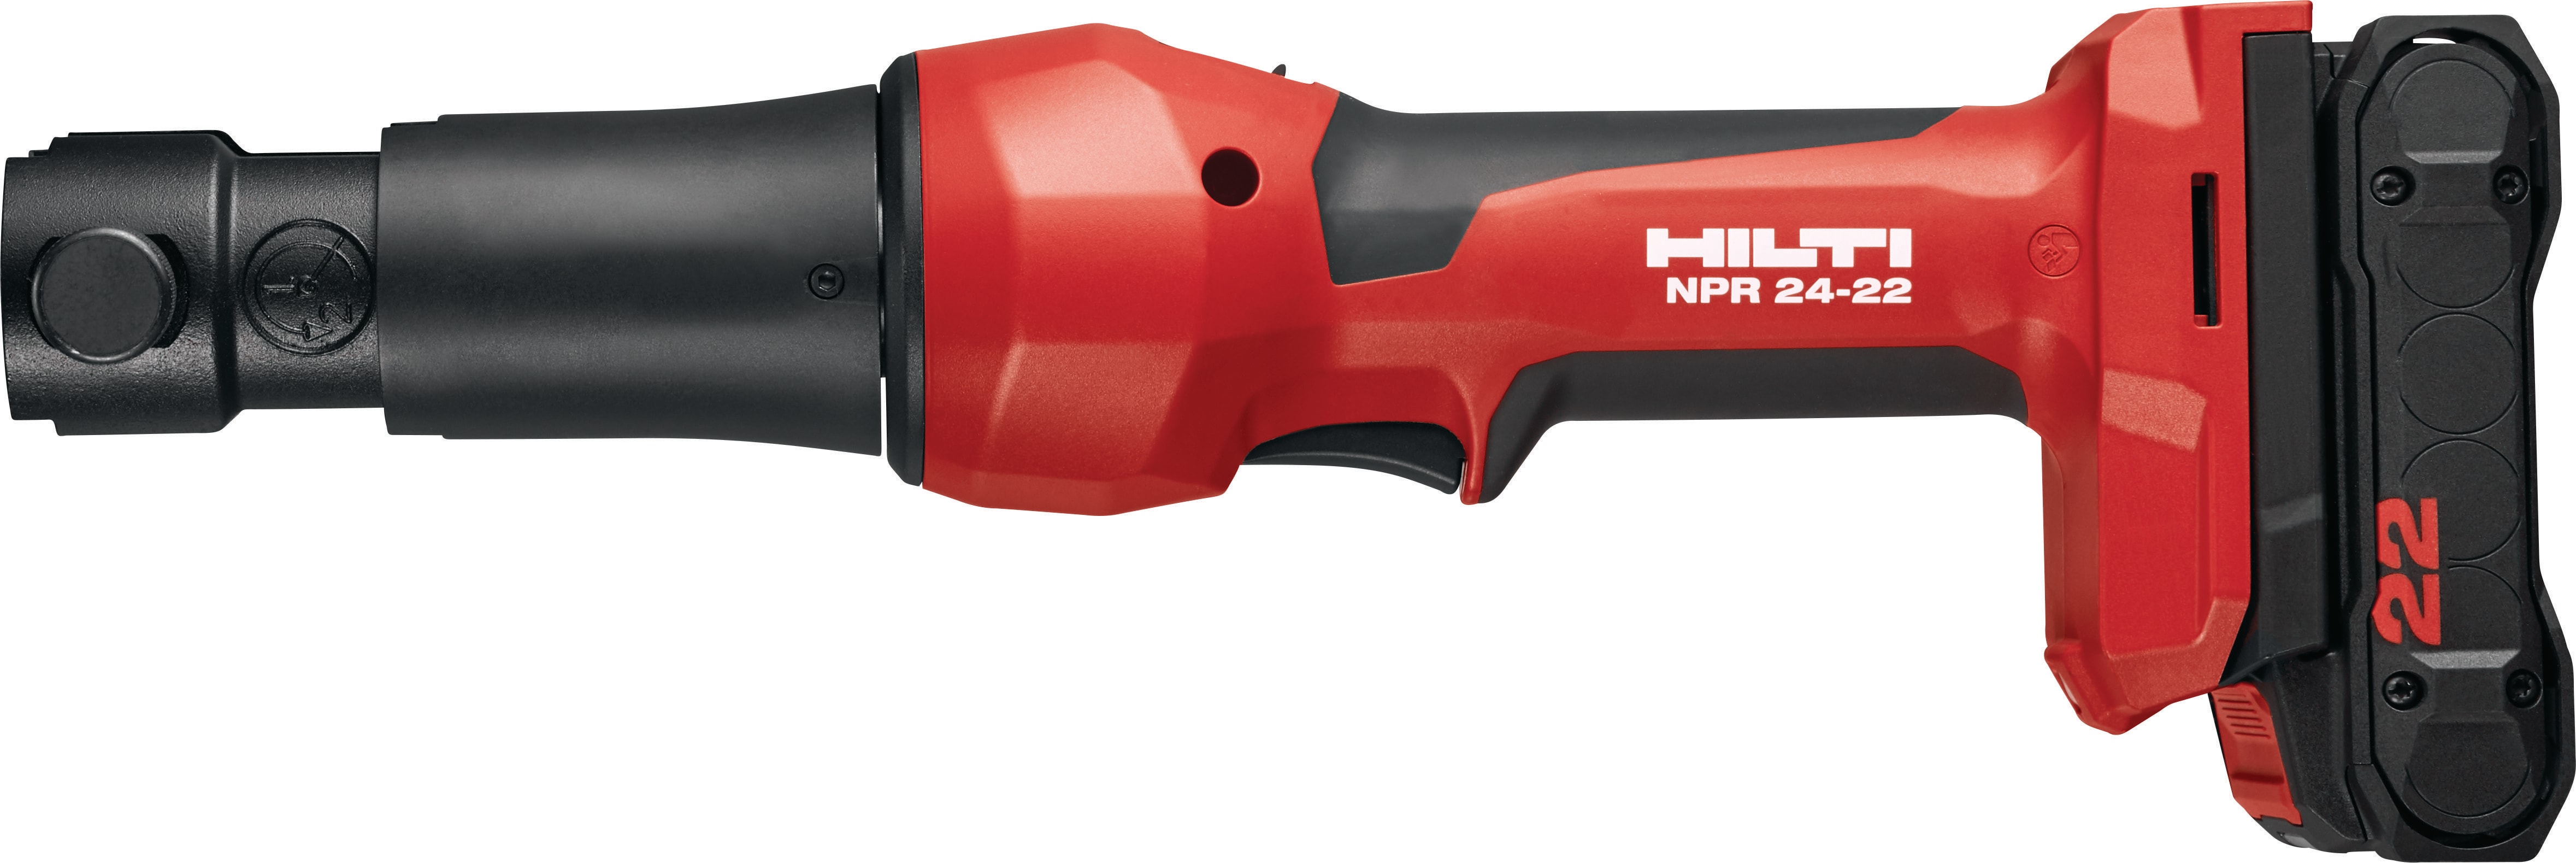 NPR 24-22 Pipe press tool - Cordless Hydraulic Pipe Press Tools - Hilti  Canada